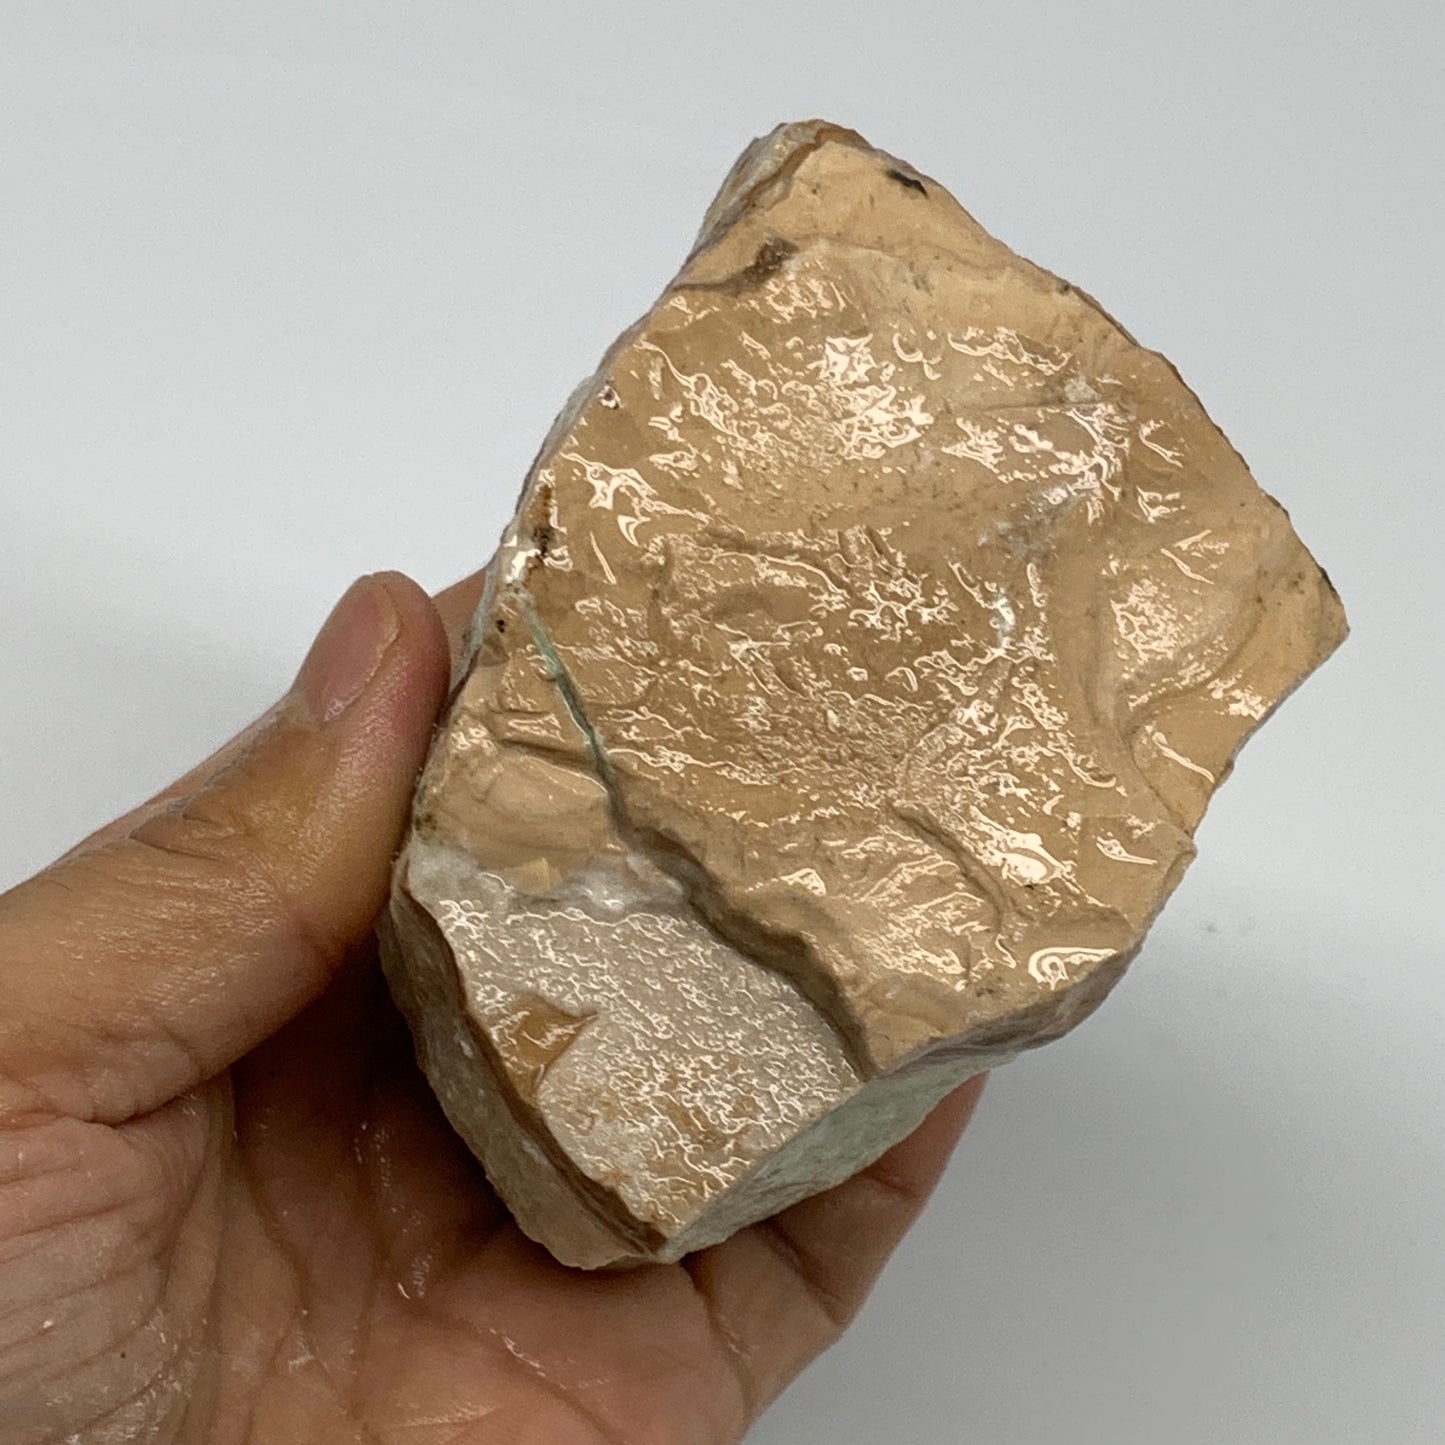 573g, 3.6"x2.5"x2.5", Rough Pistachio Calcite Chunk Mineral @Afghanistan, B24603